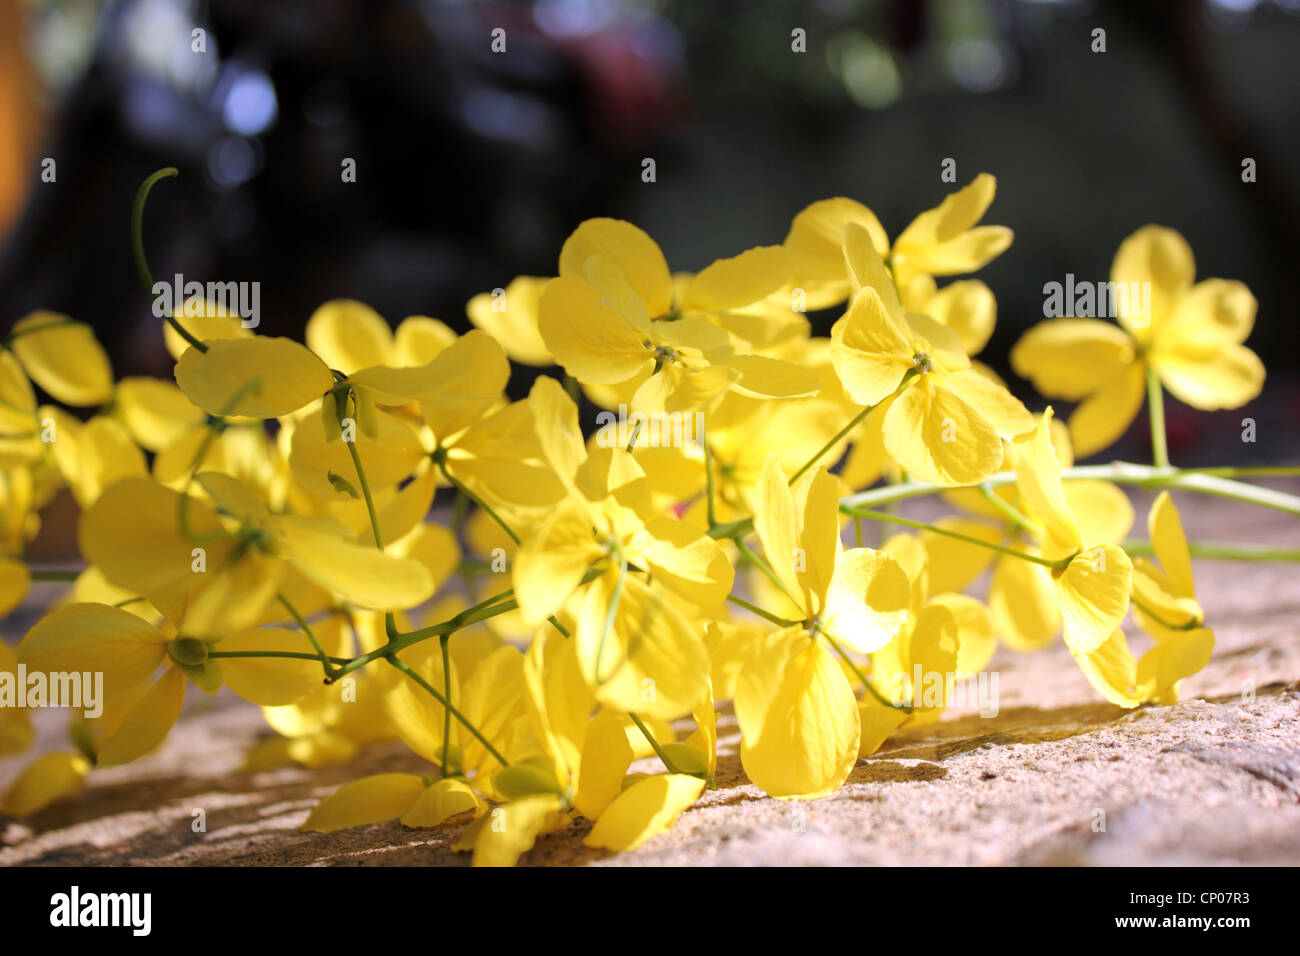 Fiore giallo di cassia fistola o golden shower tree giacente a terra Foto Stock